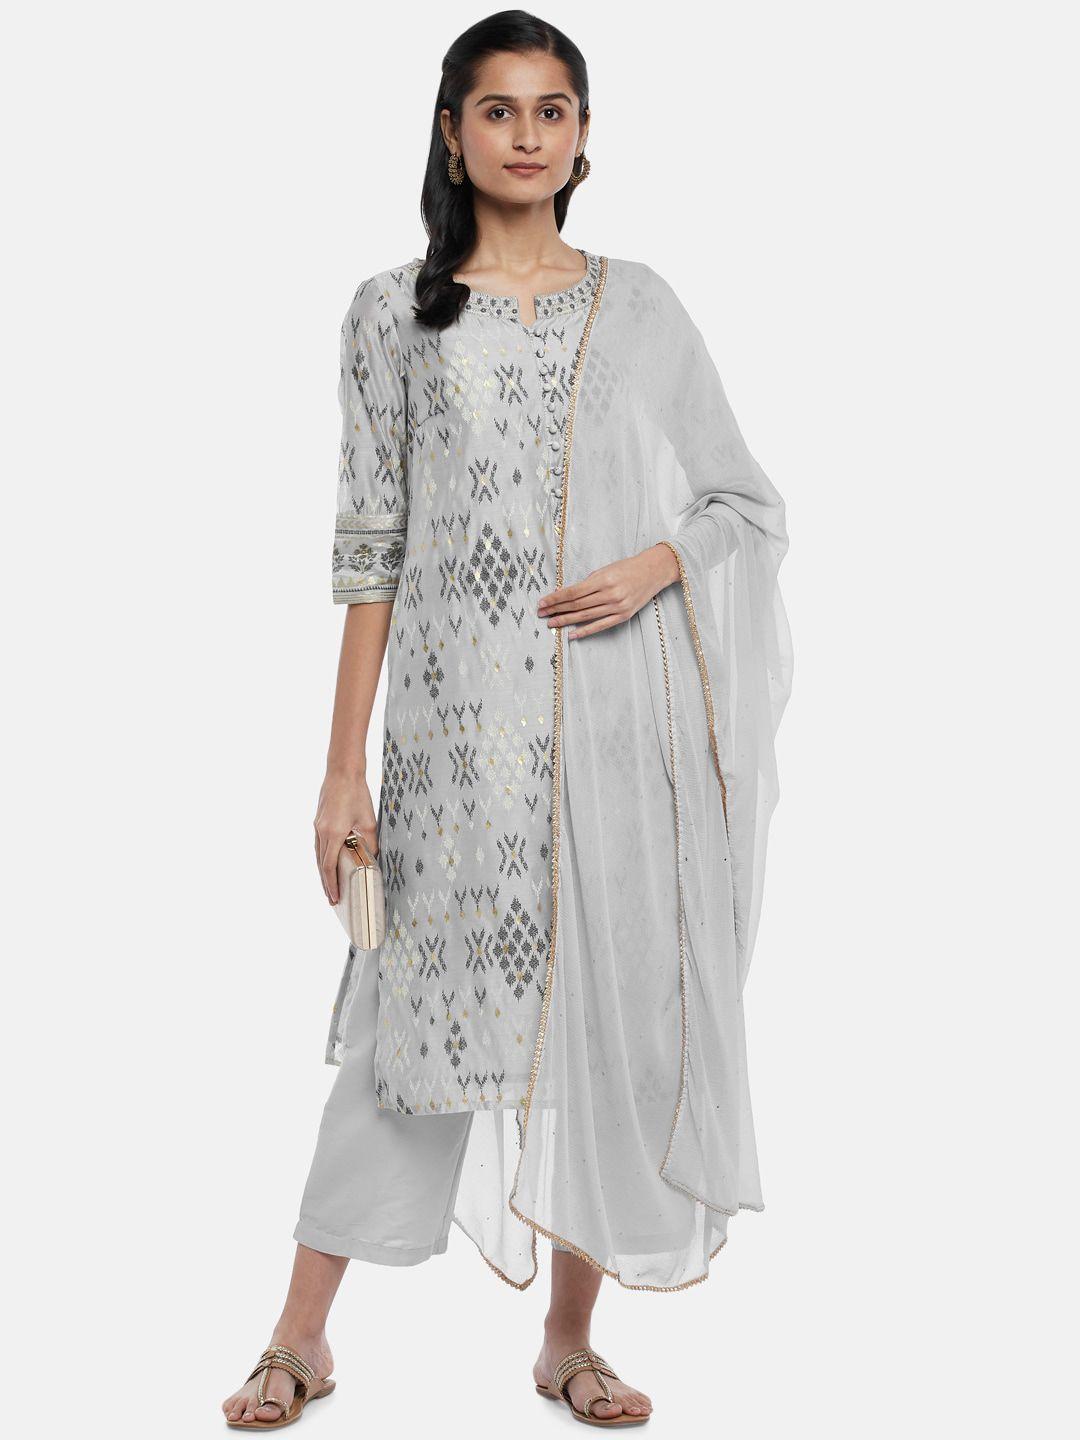 rangmanch by pantaloons women grey printed chanderi silk kurti with palazzos & with dupatta